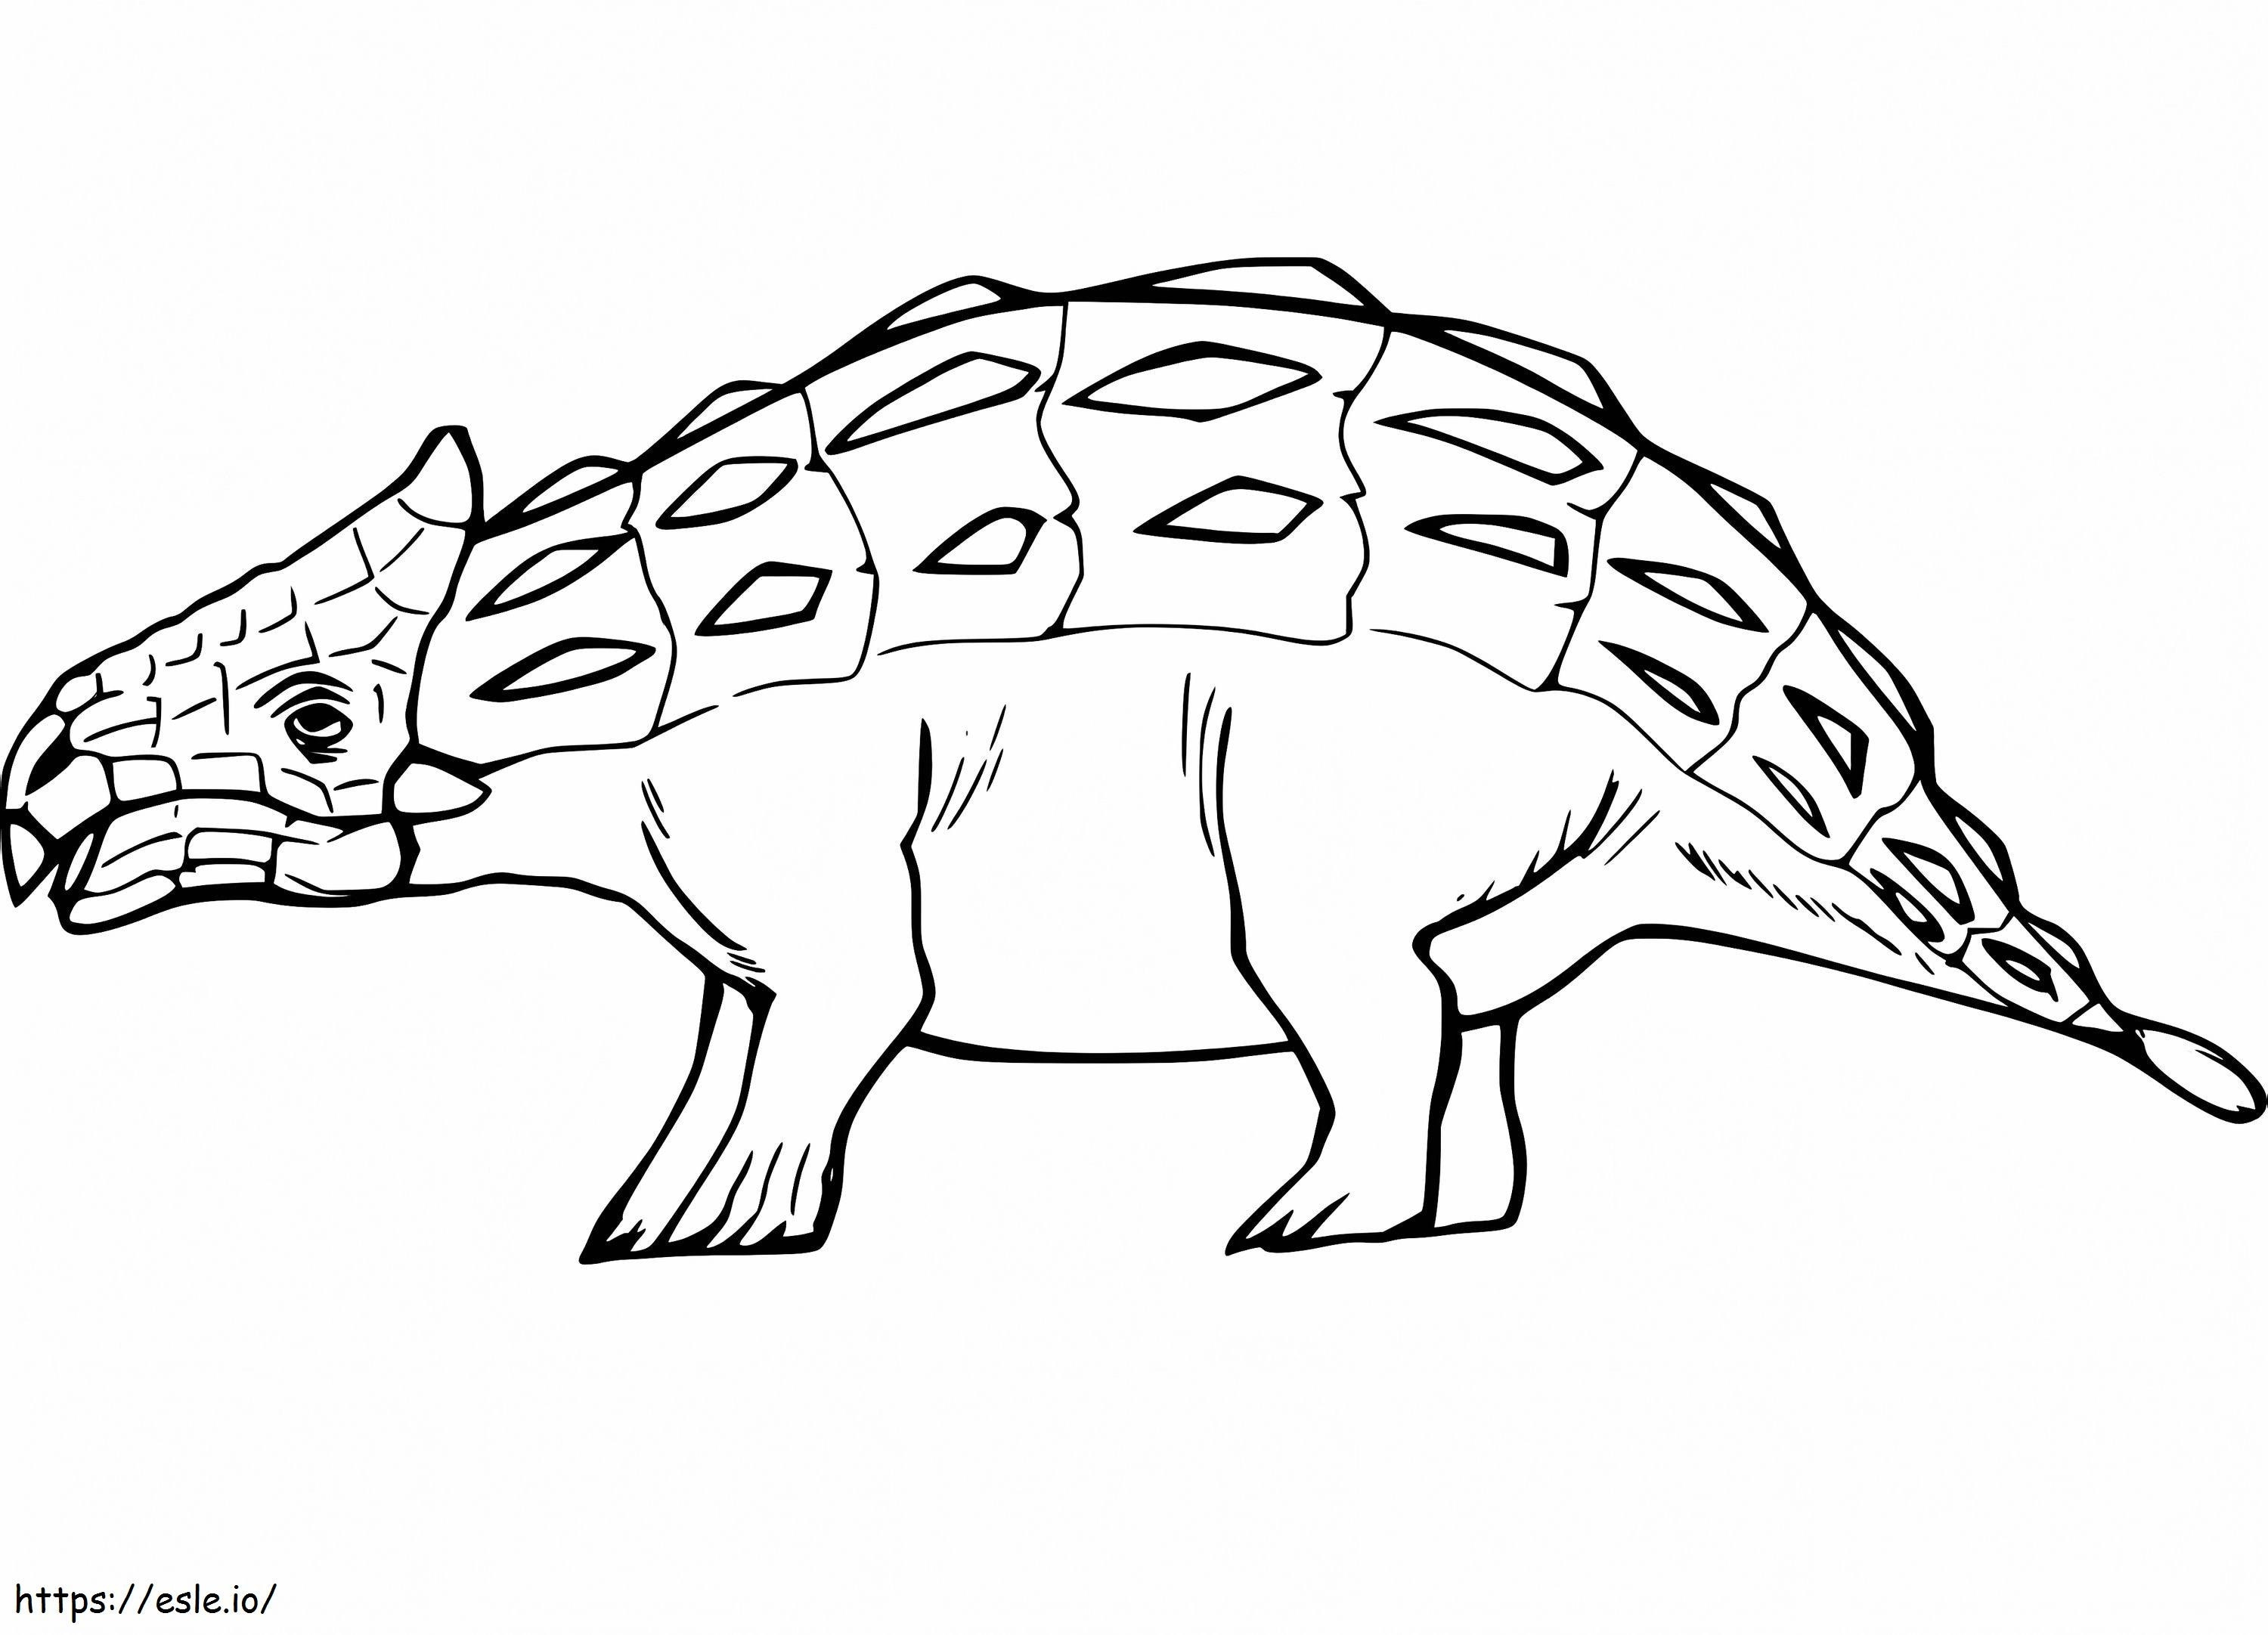 Eski Ankylosaurus boyama